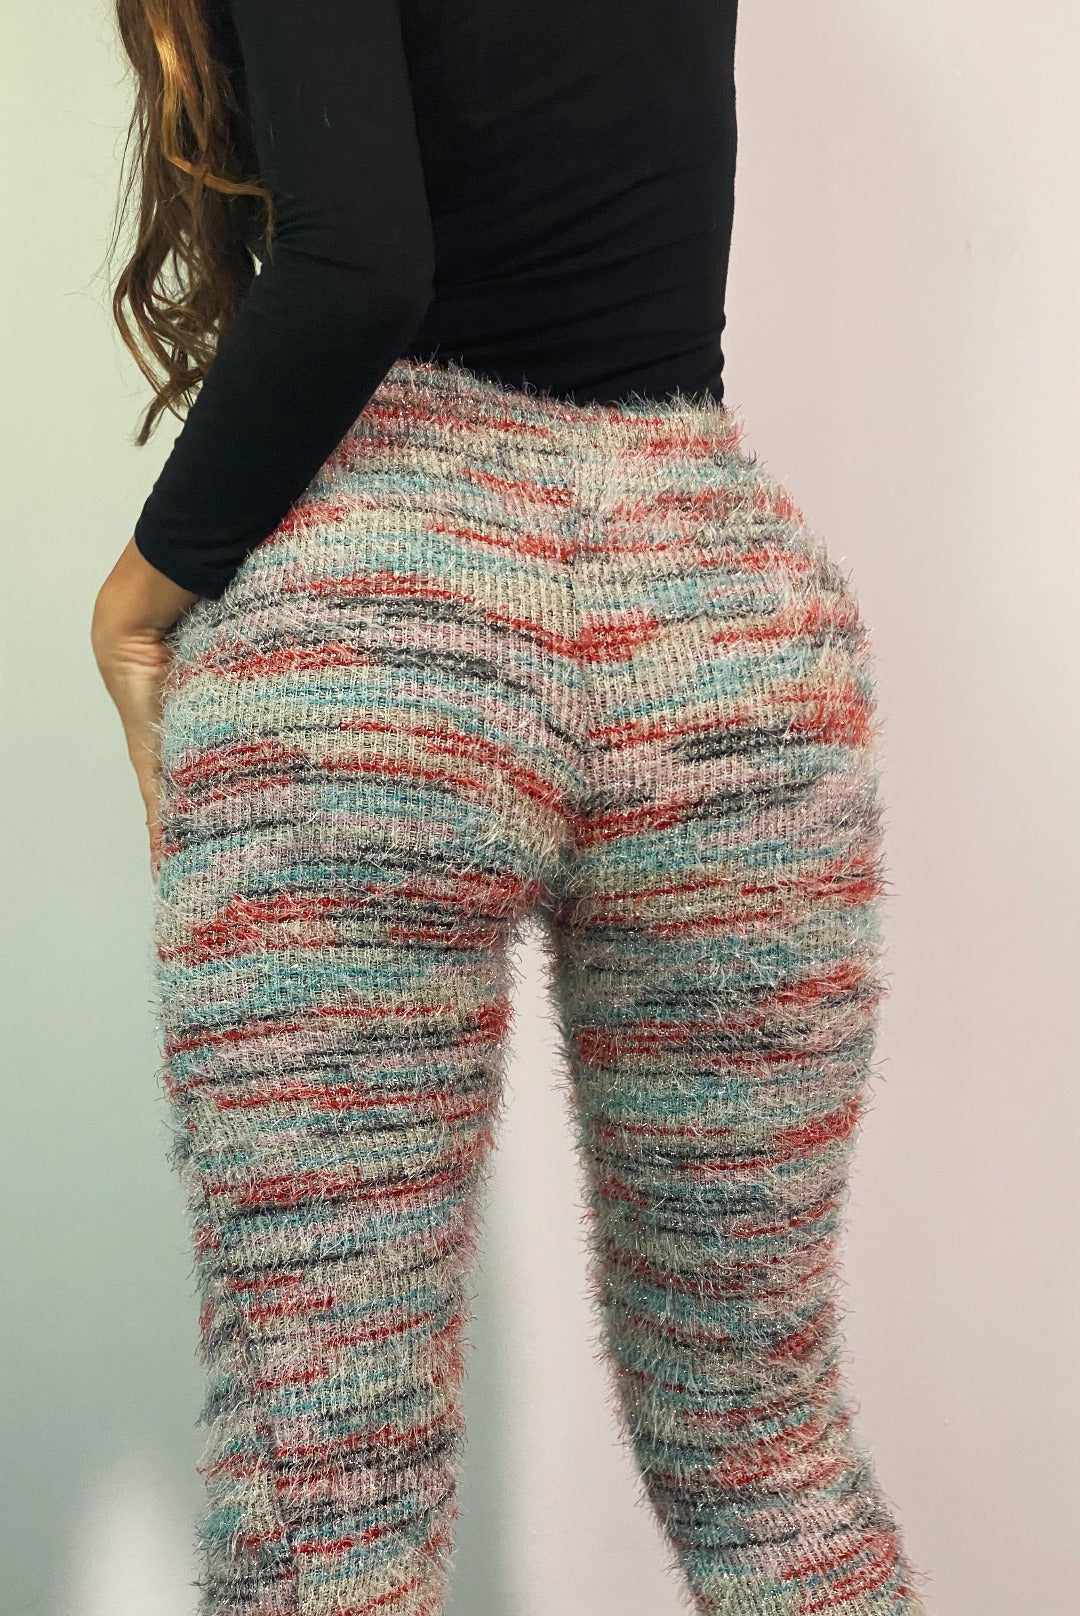 Pantaloni 'Fluffy Colorful' - Pantaloni dama evazati multicolori